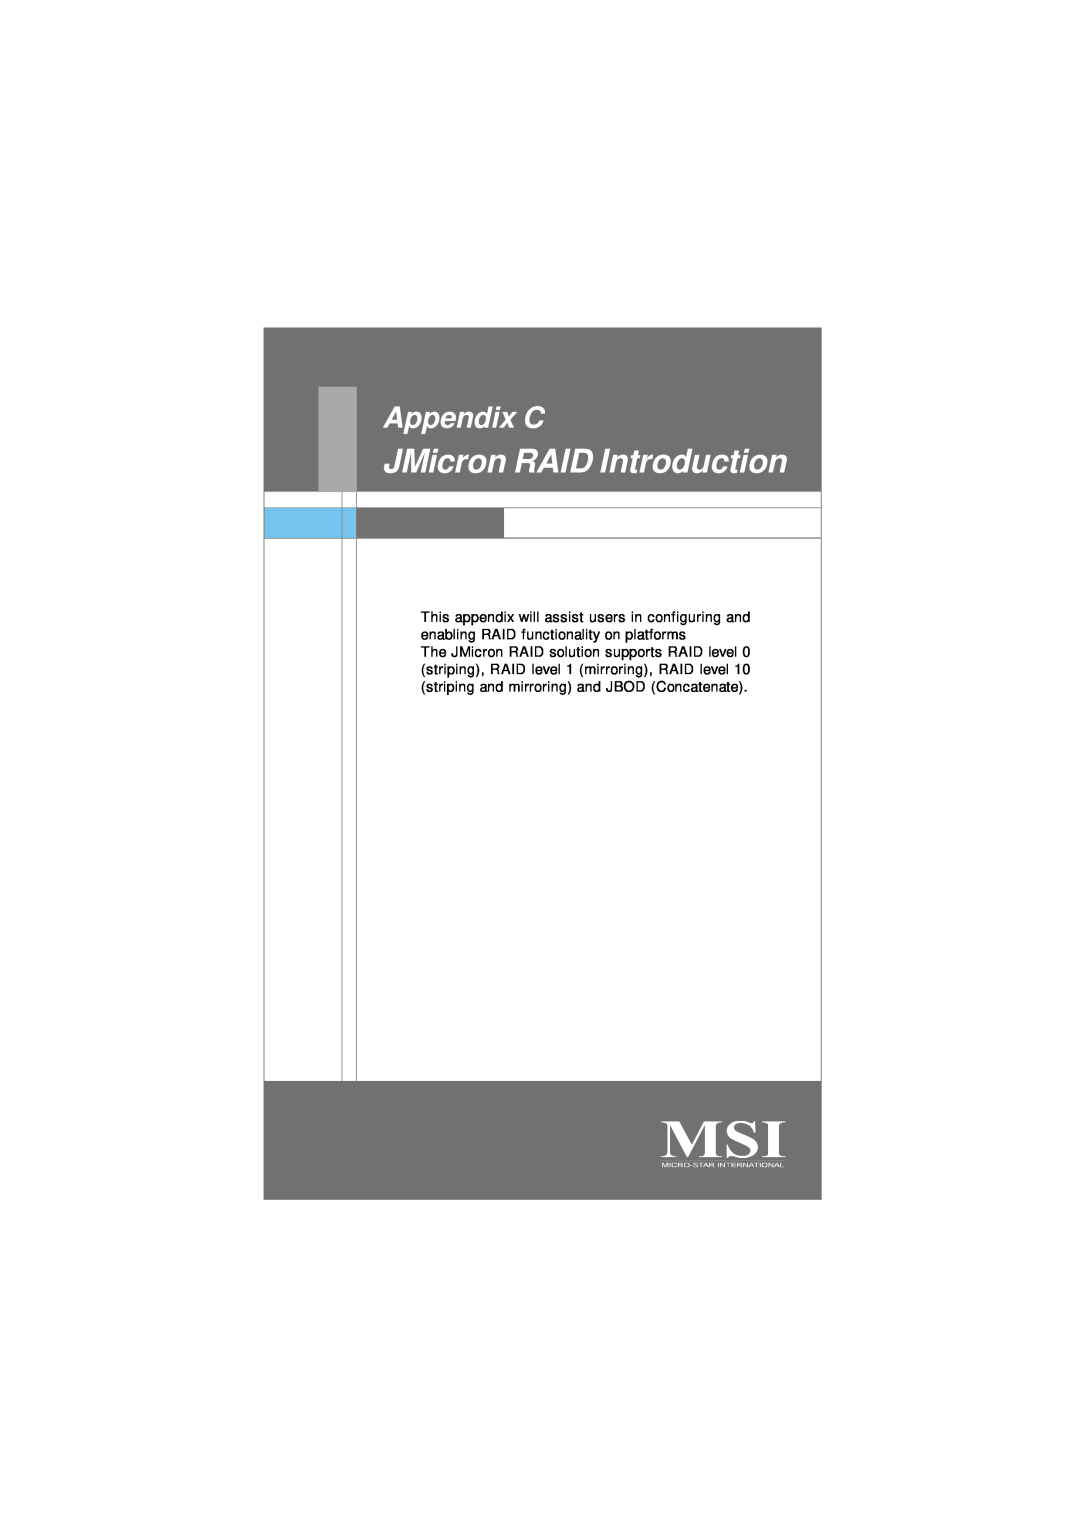 Nvidia MS-7374 manual JMicron RAID Introduction, Appendix C 